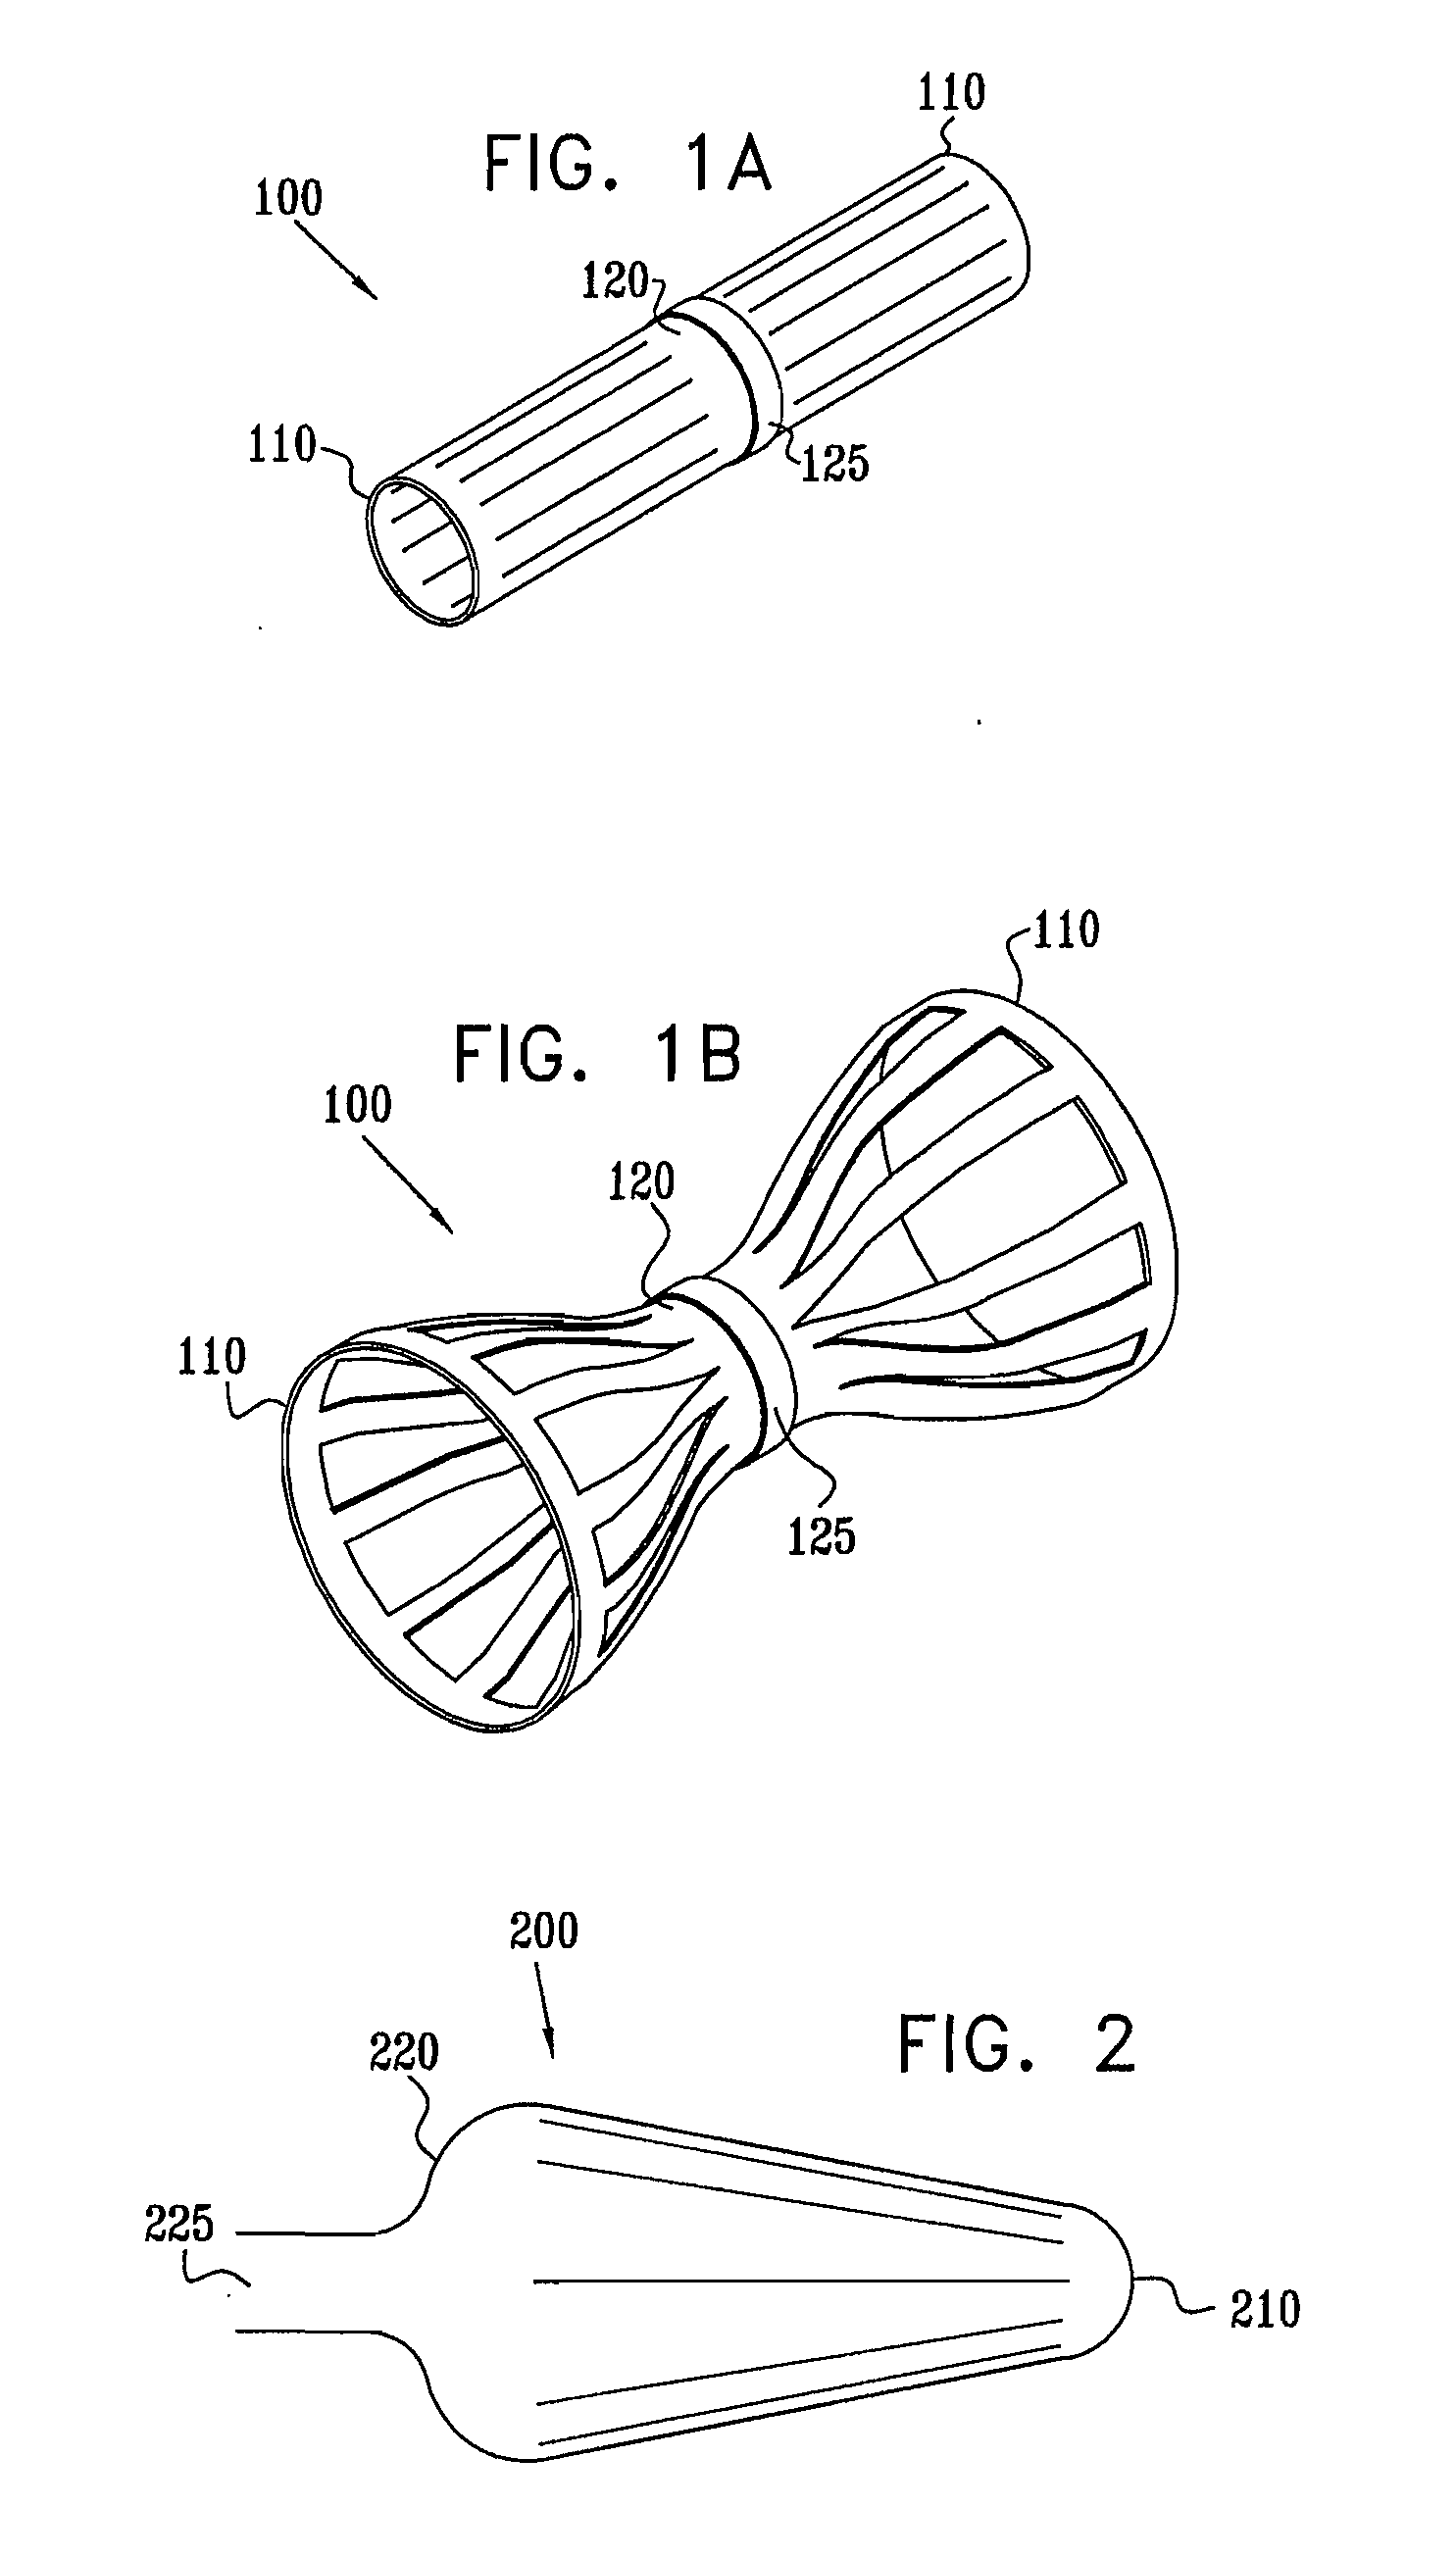 Varying diameter vascular implant and balloon